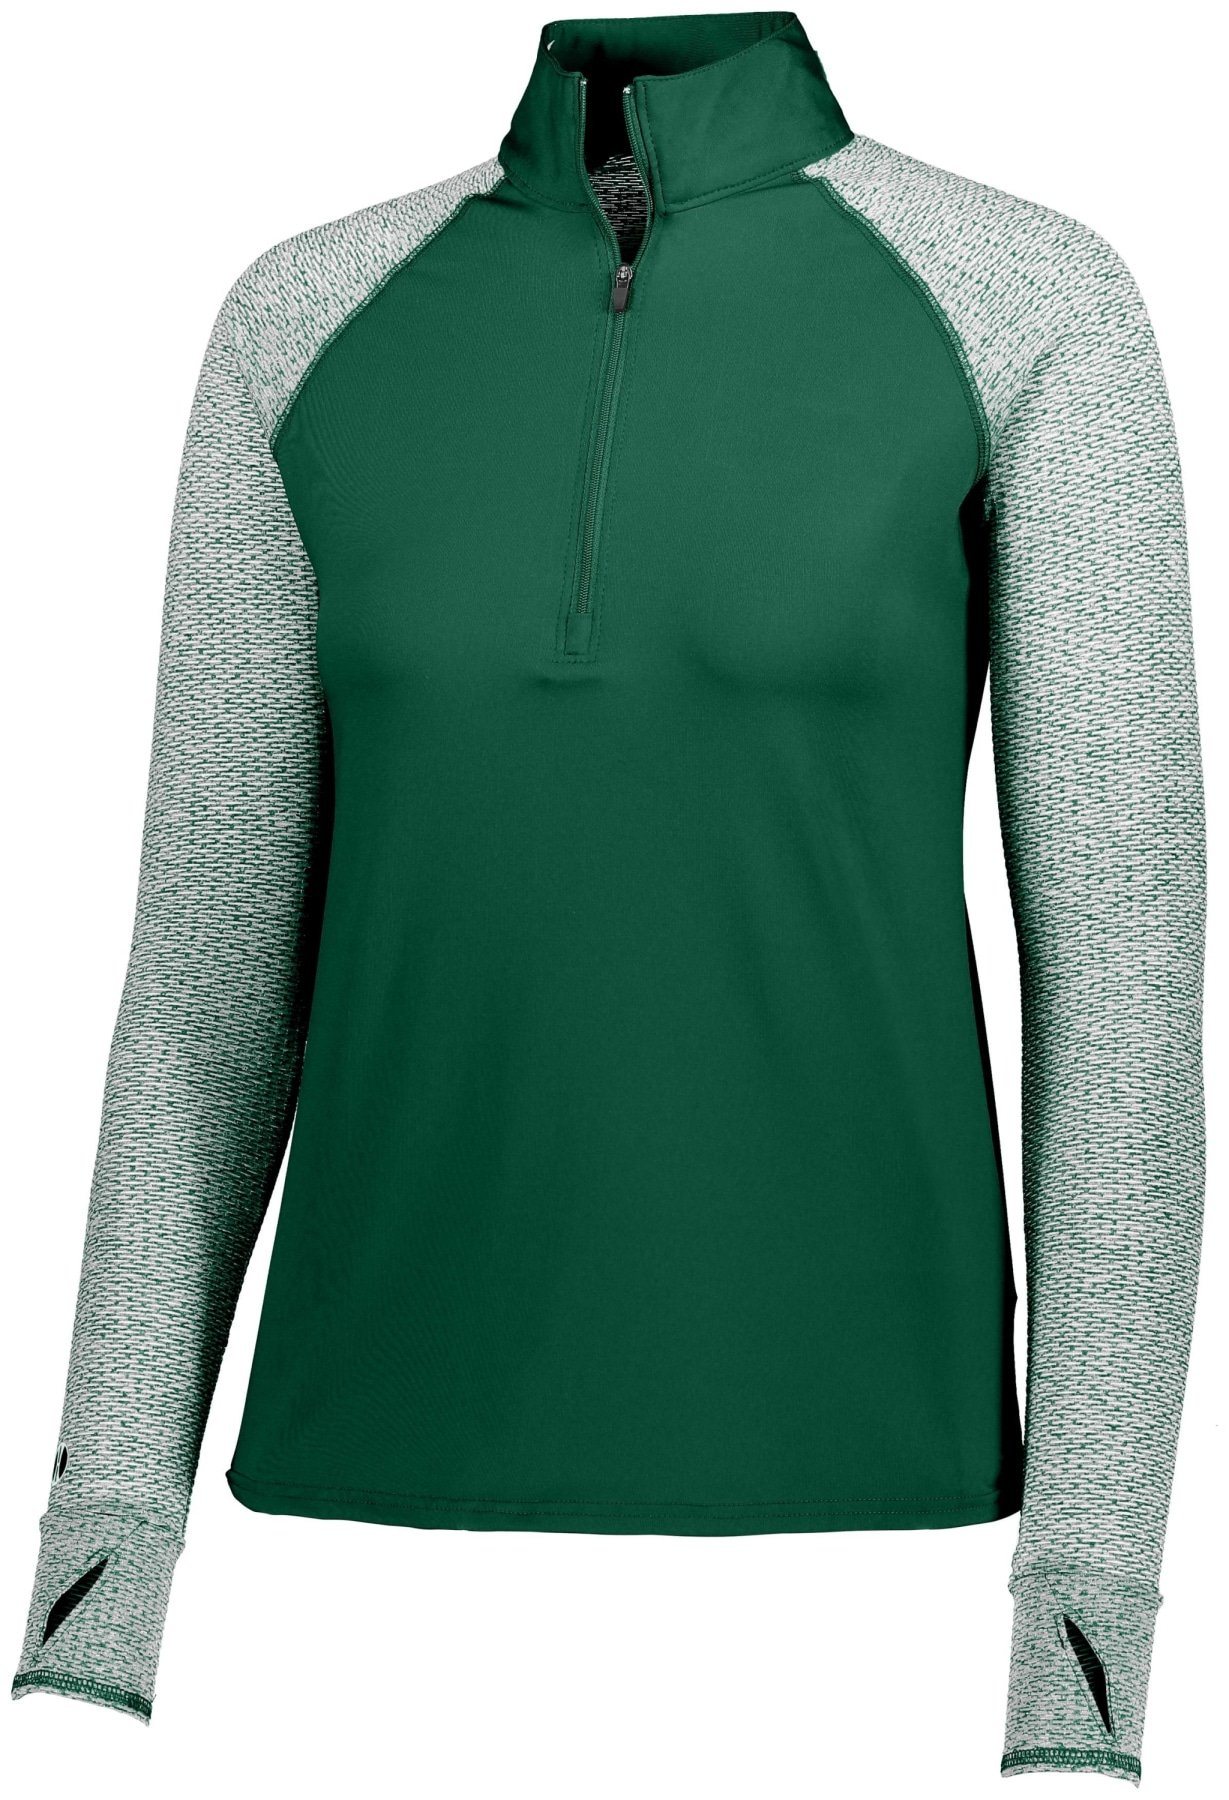 Ladies Athletic Shirt, Long Sleeve Axis 1/2 Zip Pullover 38